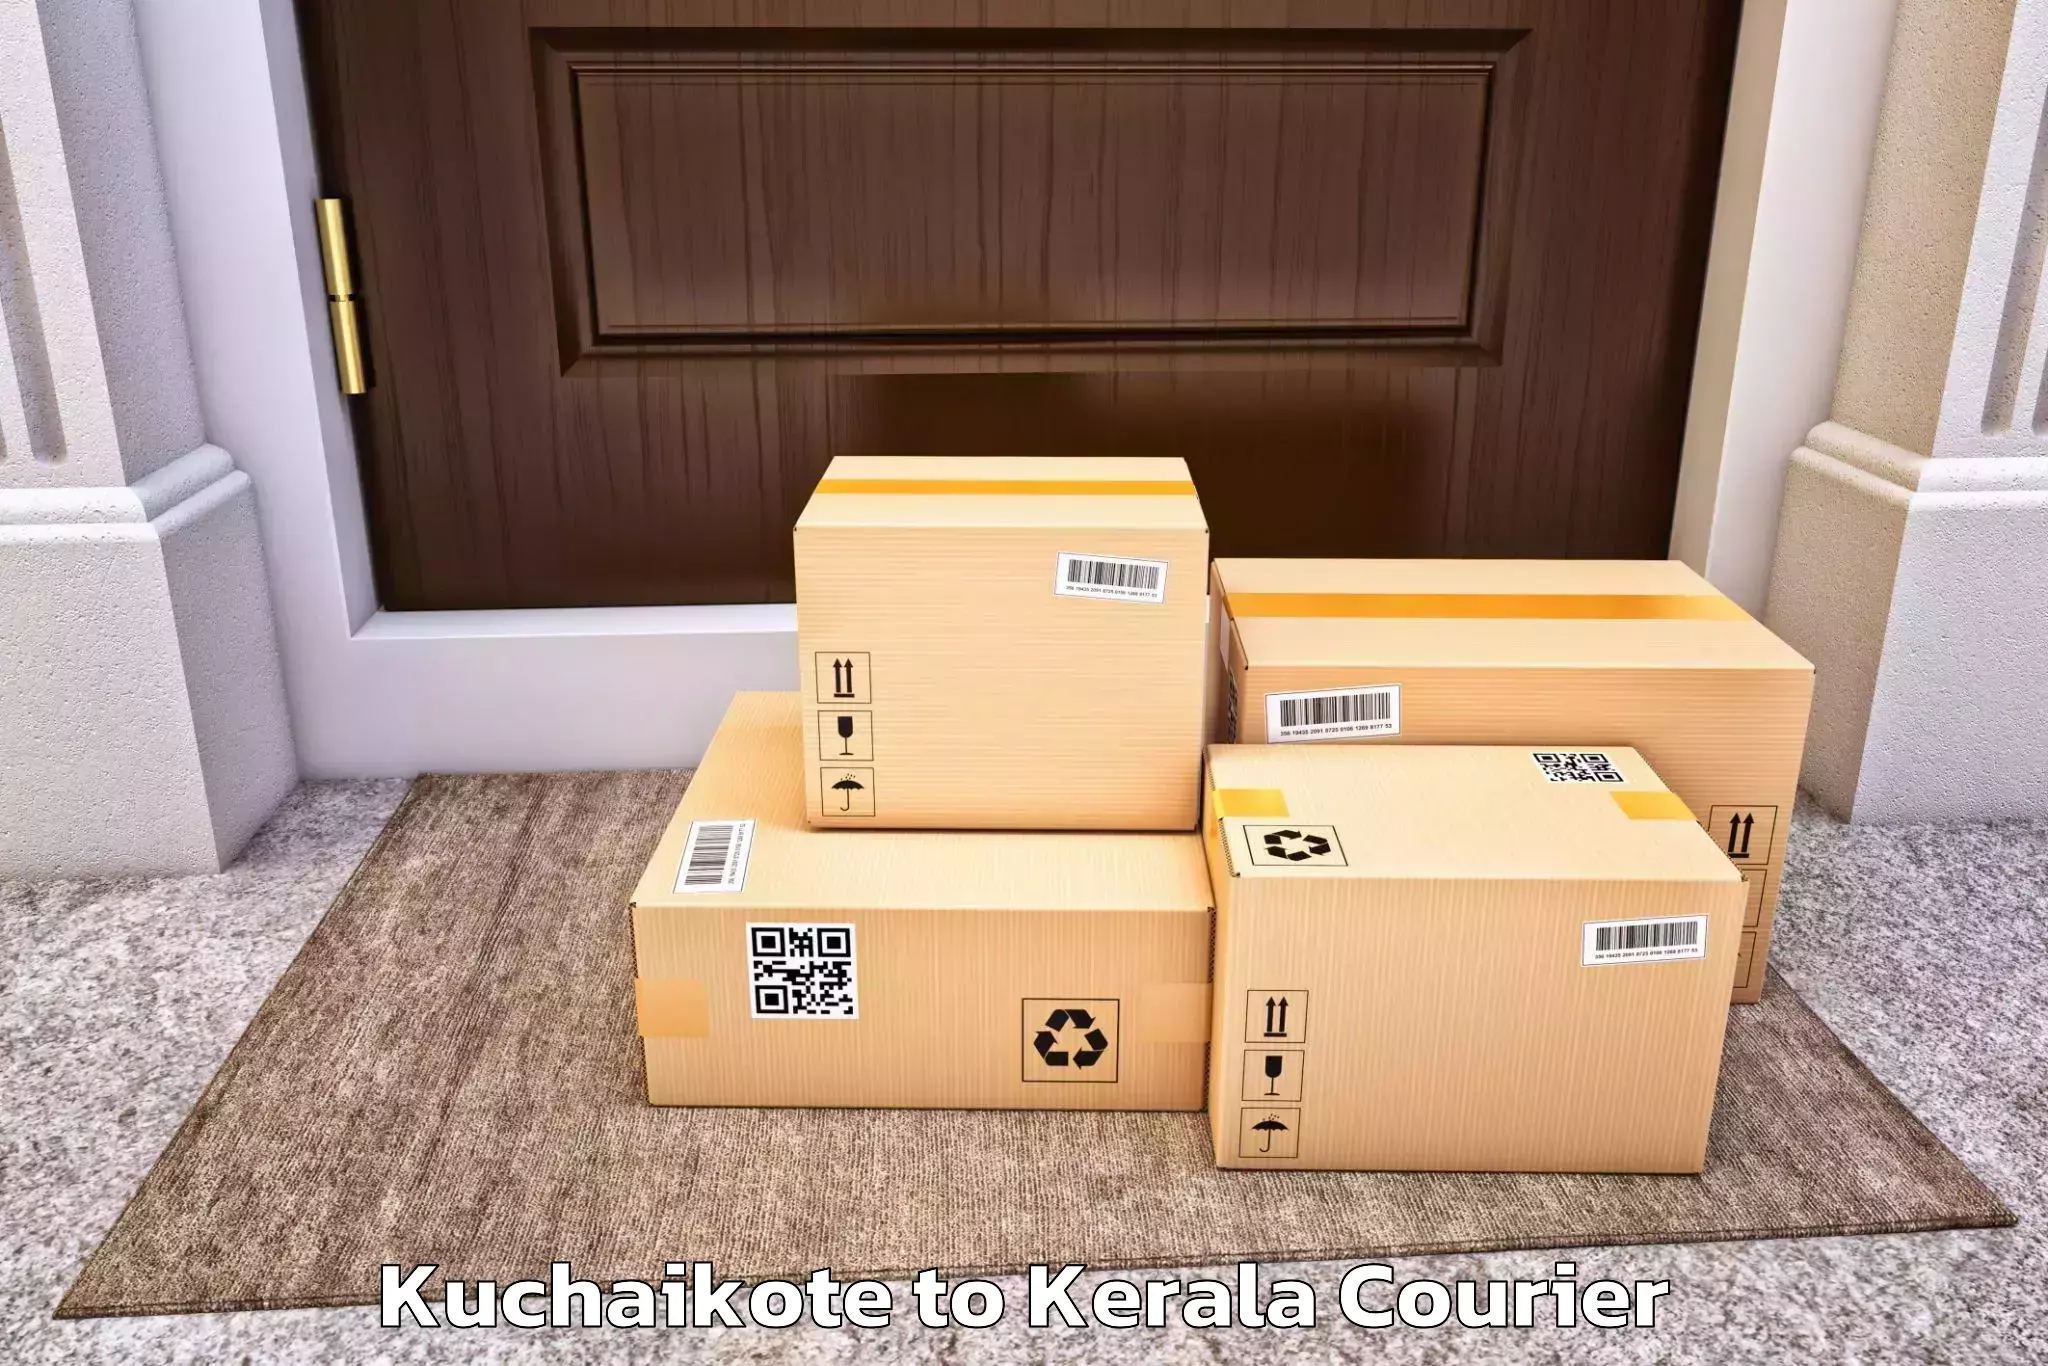 Trusted home movers Kuchaikote to Kerala